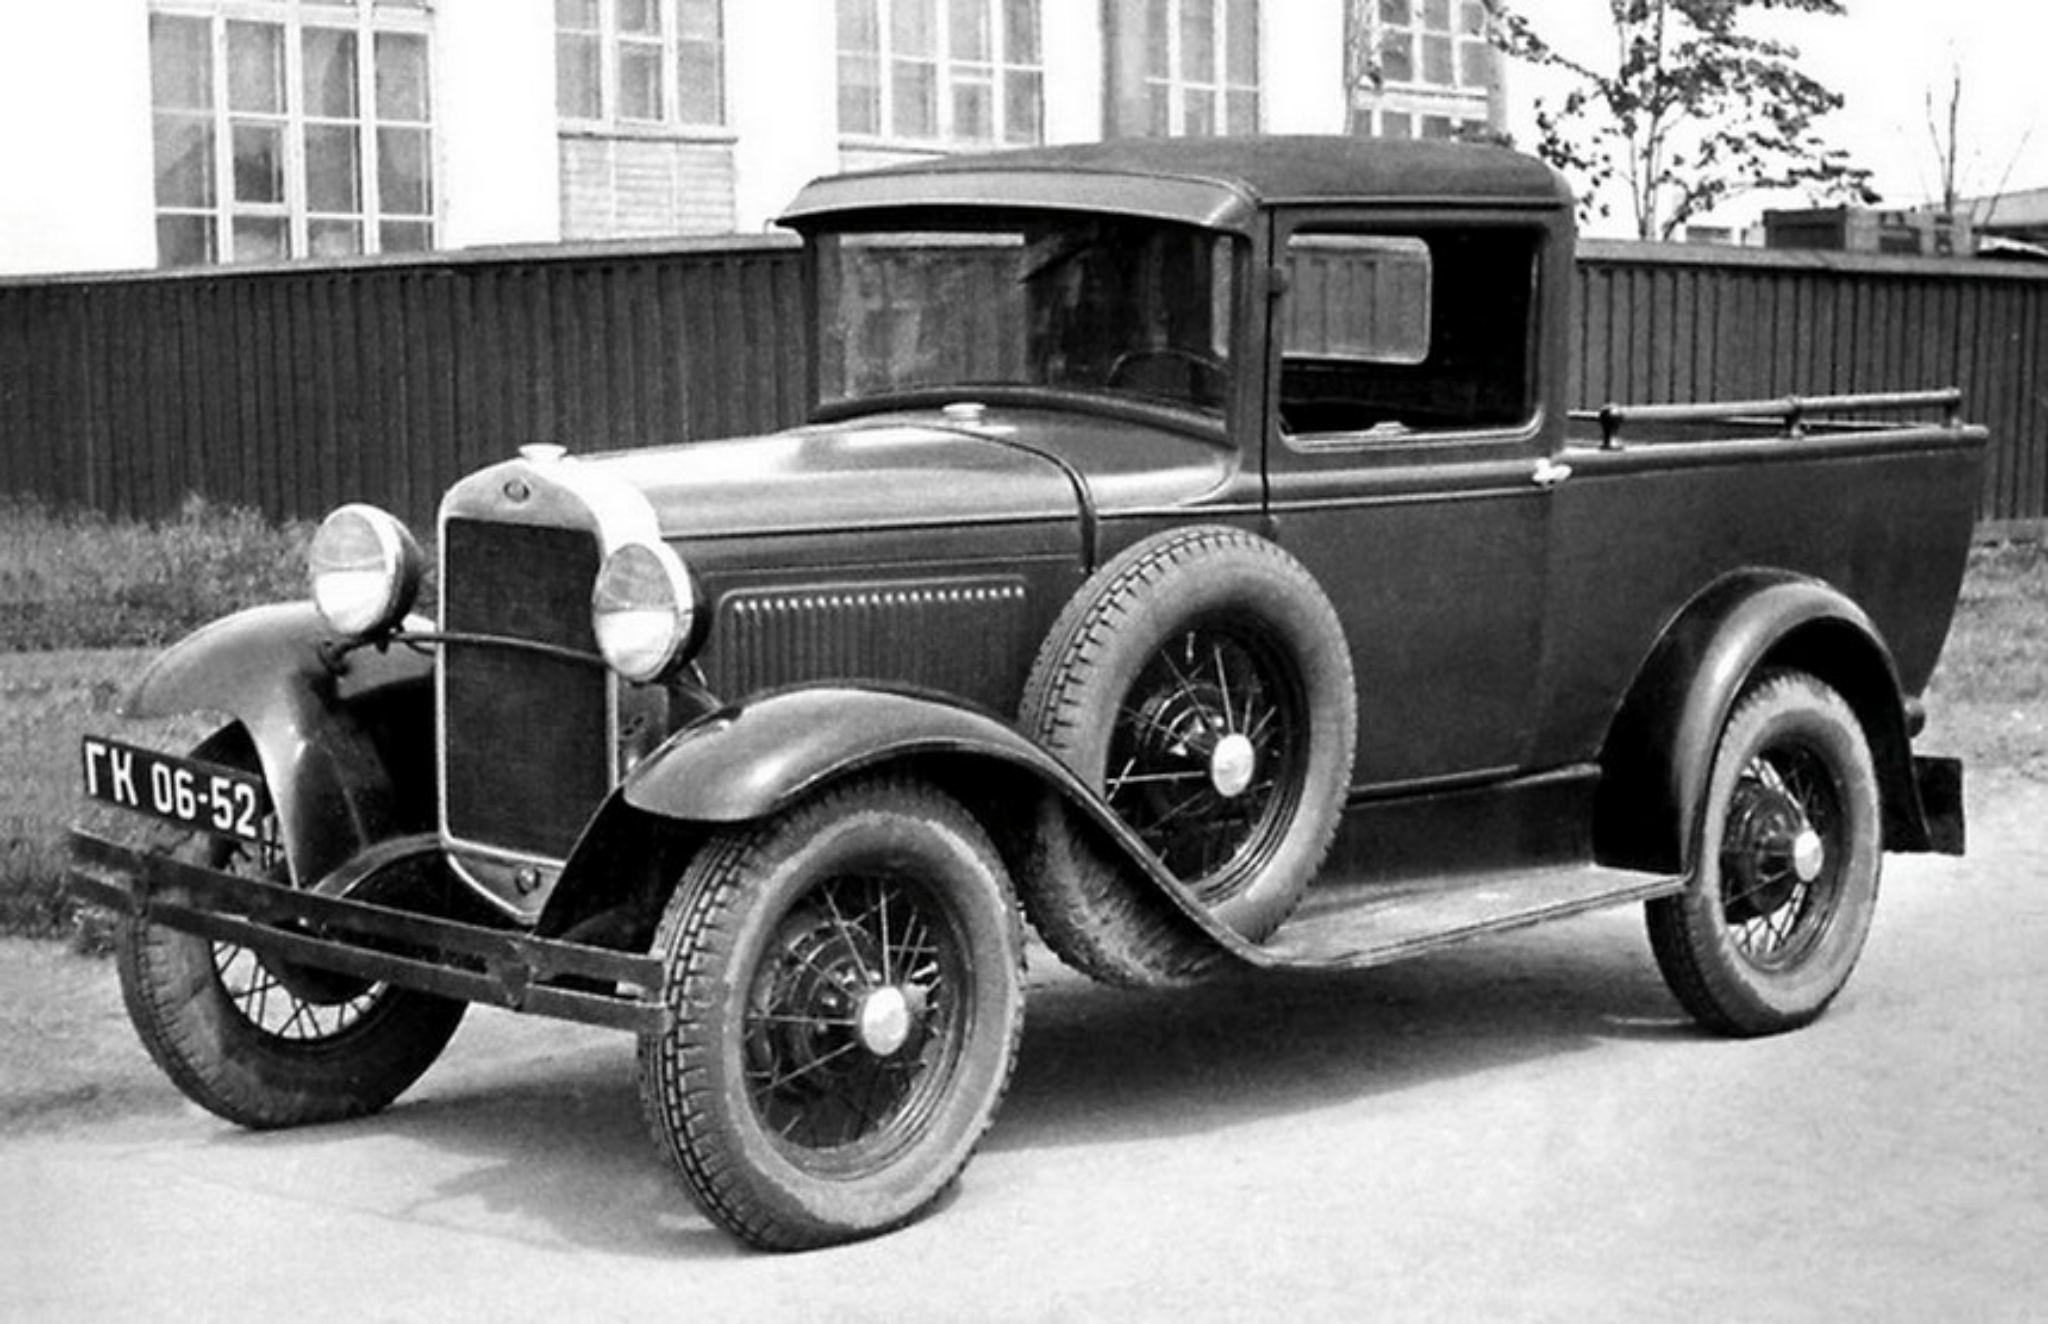 Грузовик 4 буквы. Автомобиль ГАЗ 4. ГАЗ м415. ГАЗ-4 пикап. ГАЗ-4 (1933-1937).